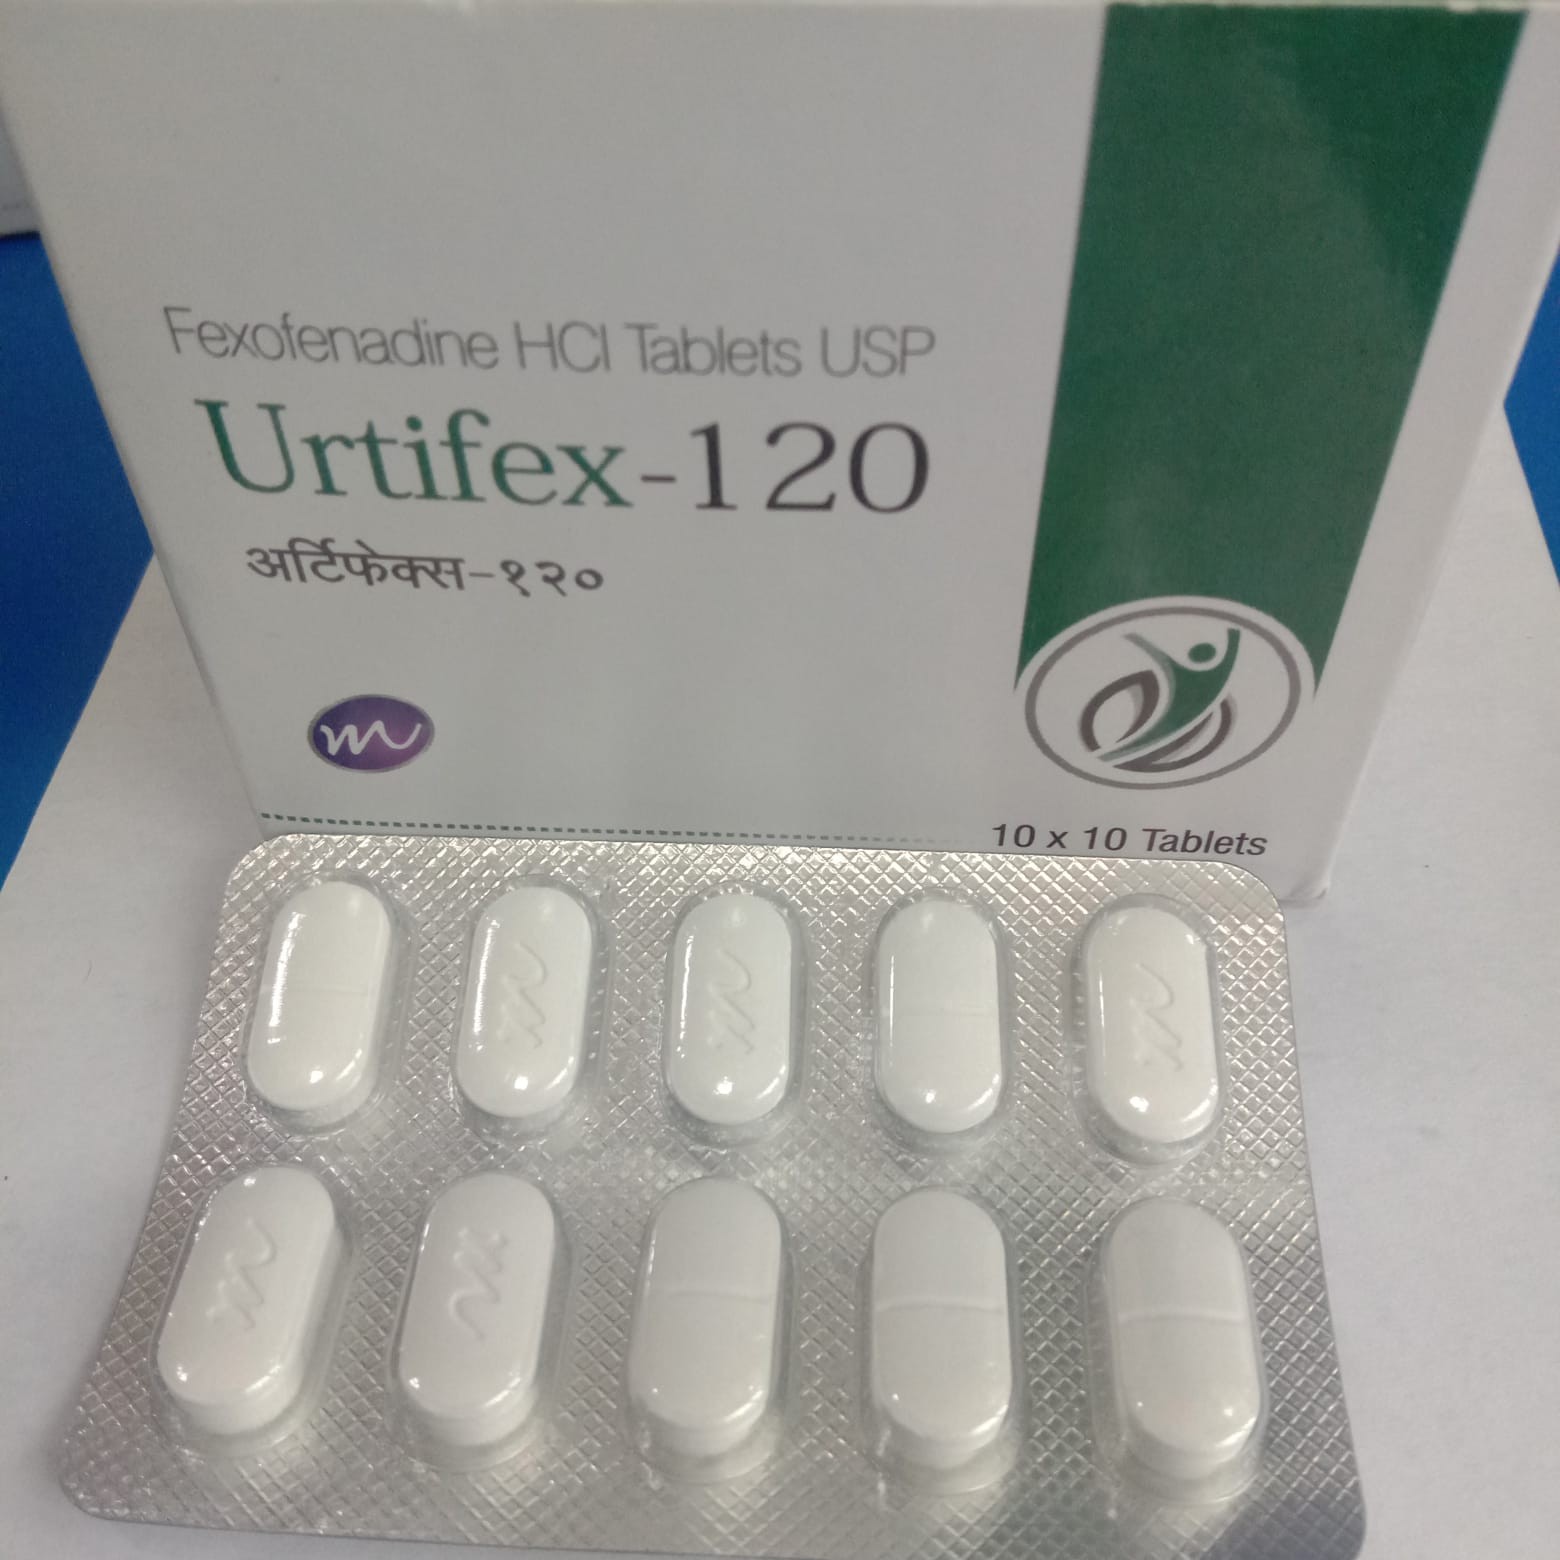 Urtifex-120 Mg Tab